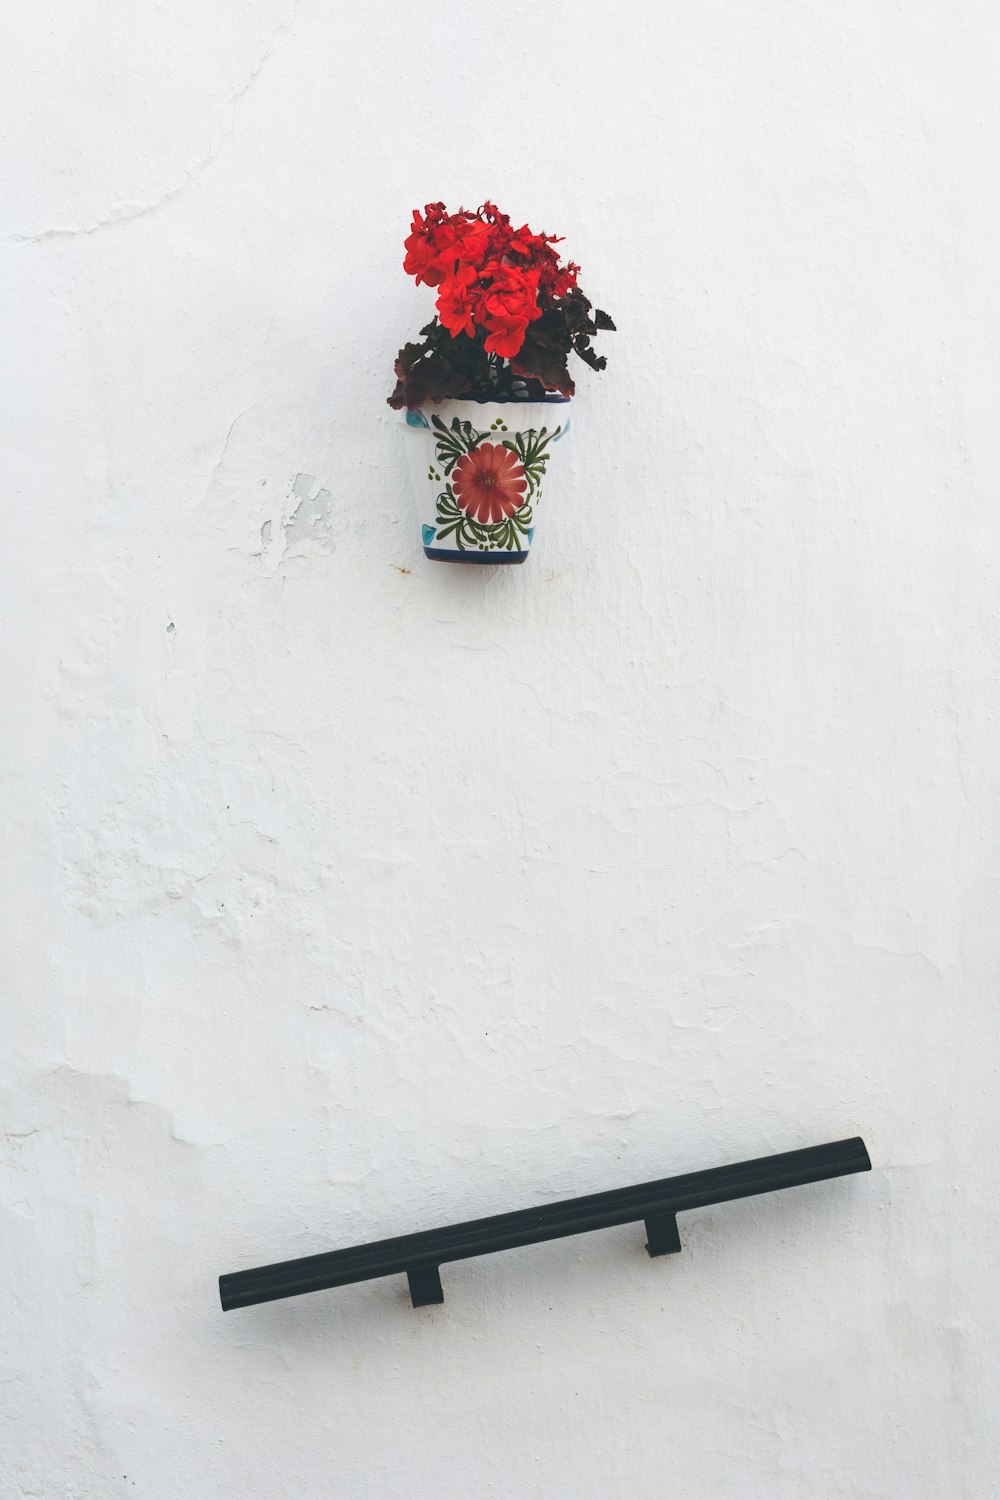 black shelf under red flowers in vase